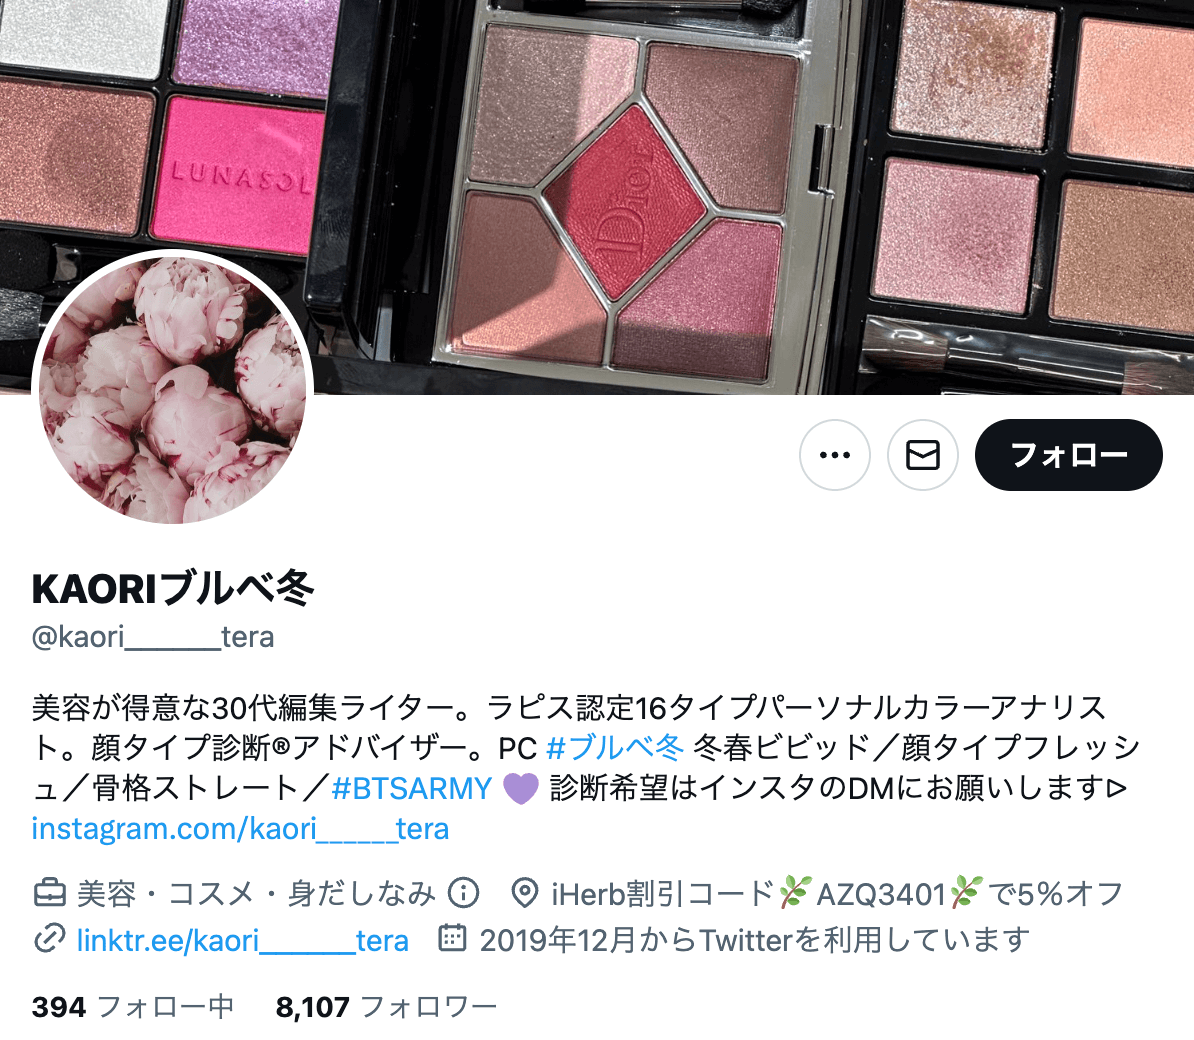 twitter-influencer-30s-beauty-cosmetics-kaori